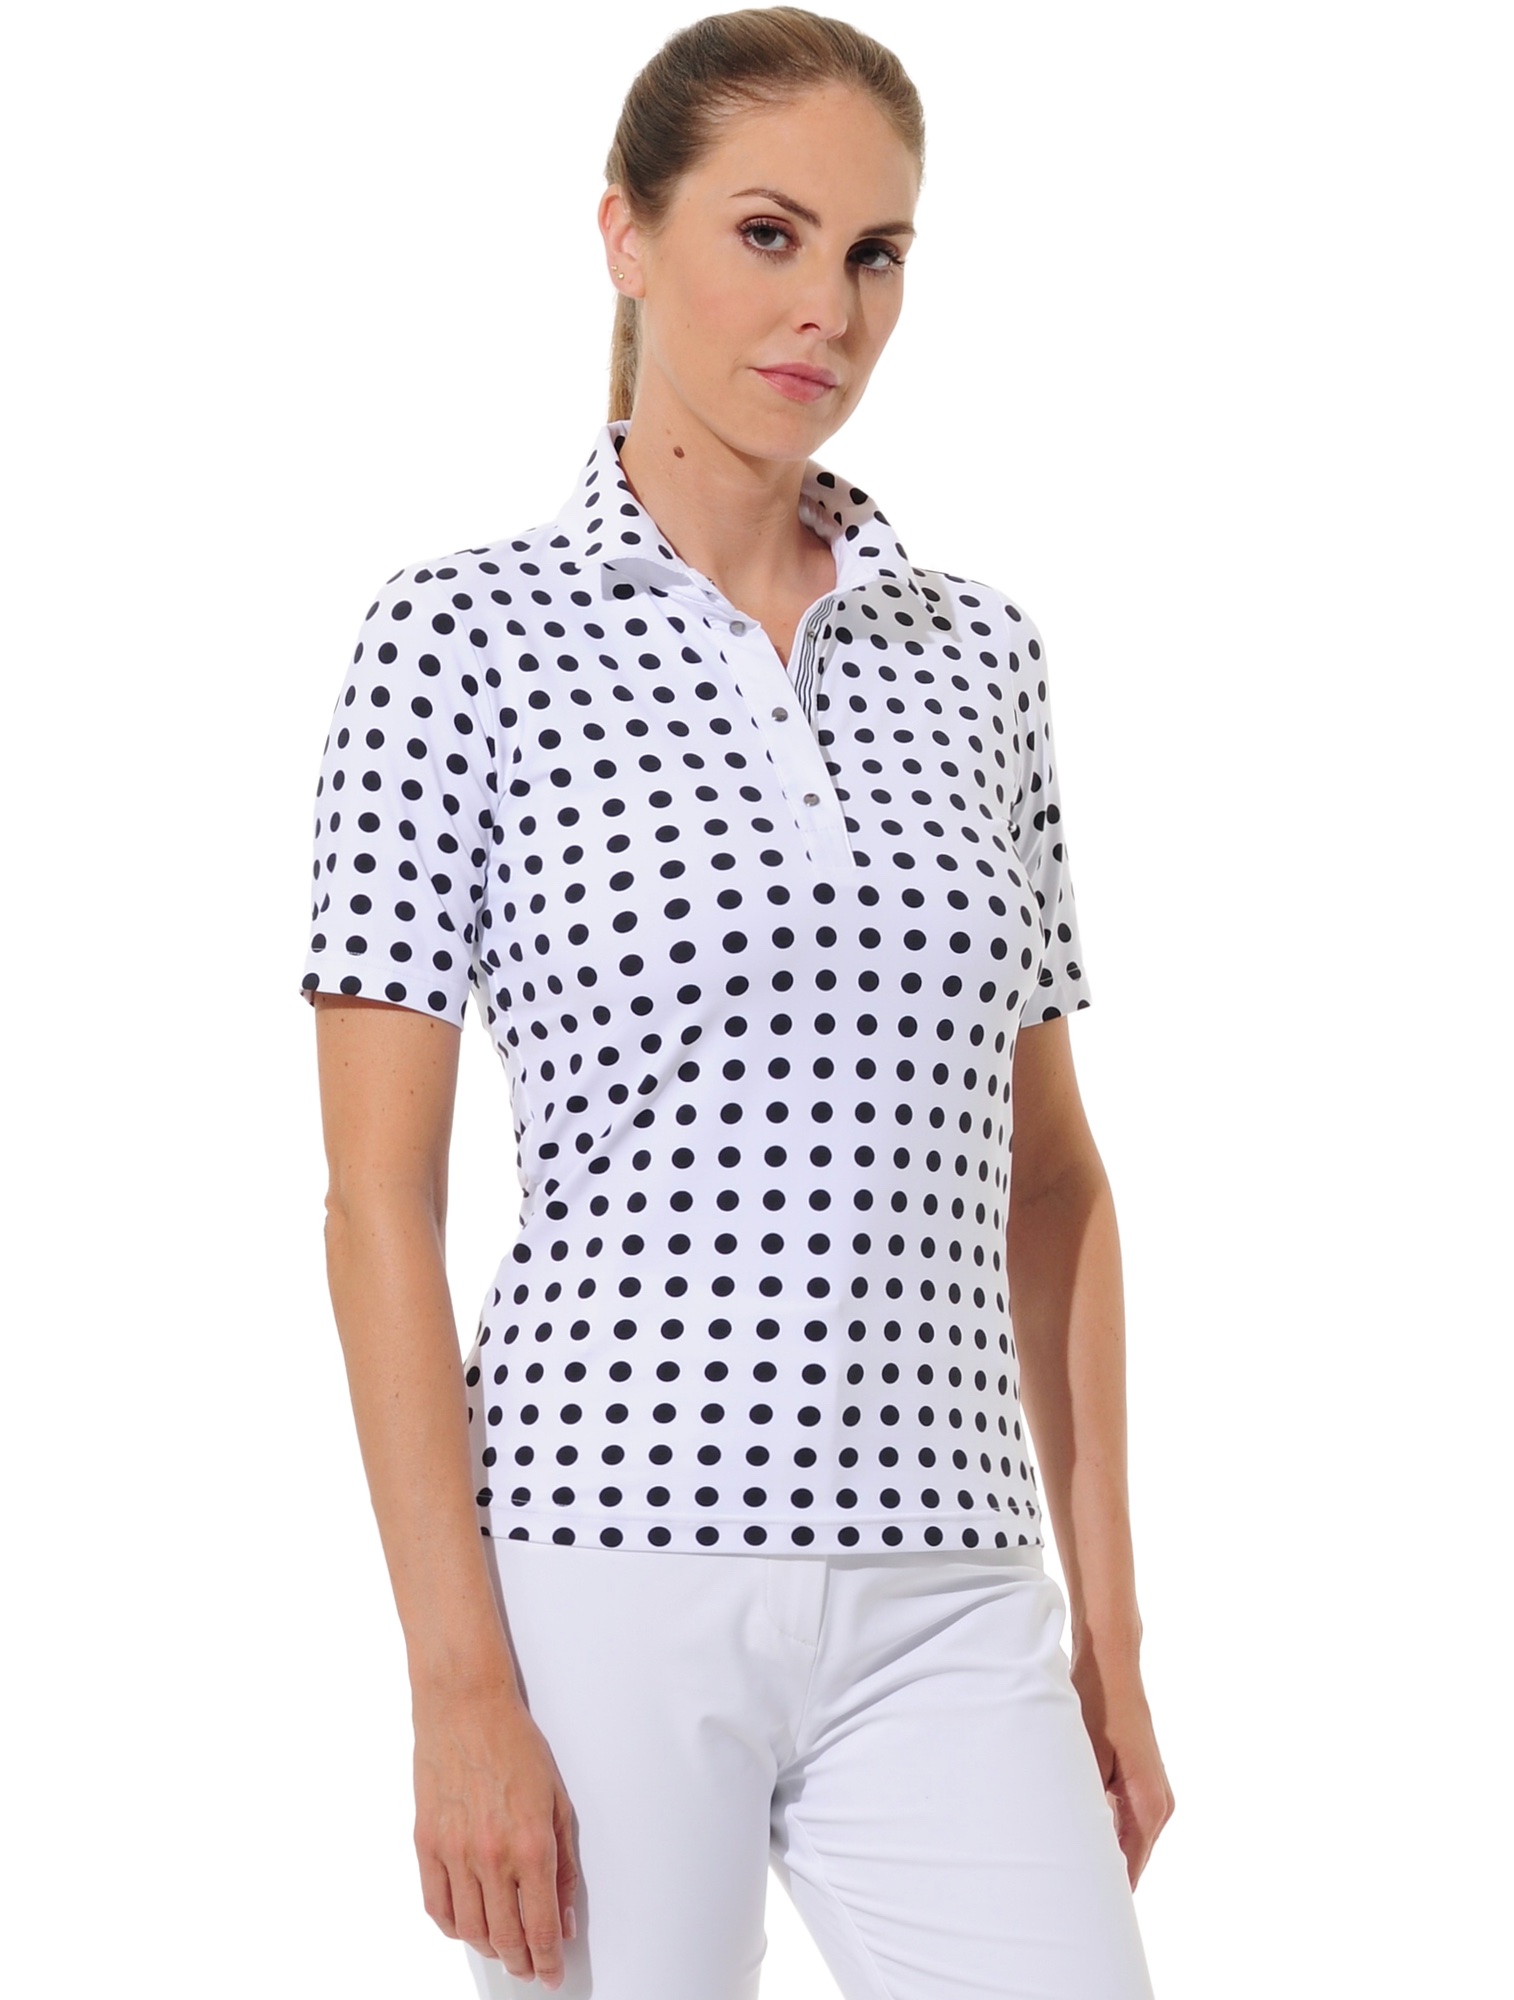 Dots Print Golf Poloshirt black/white